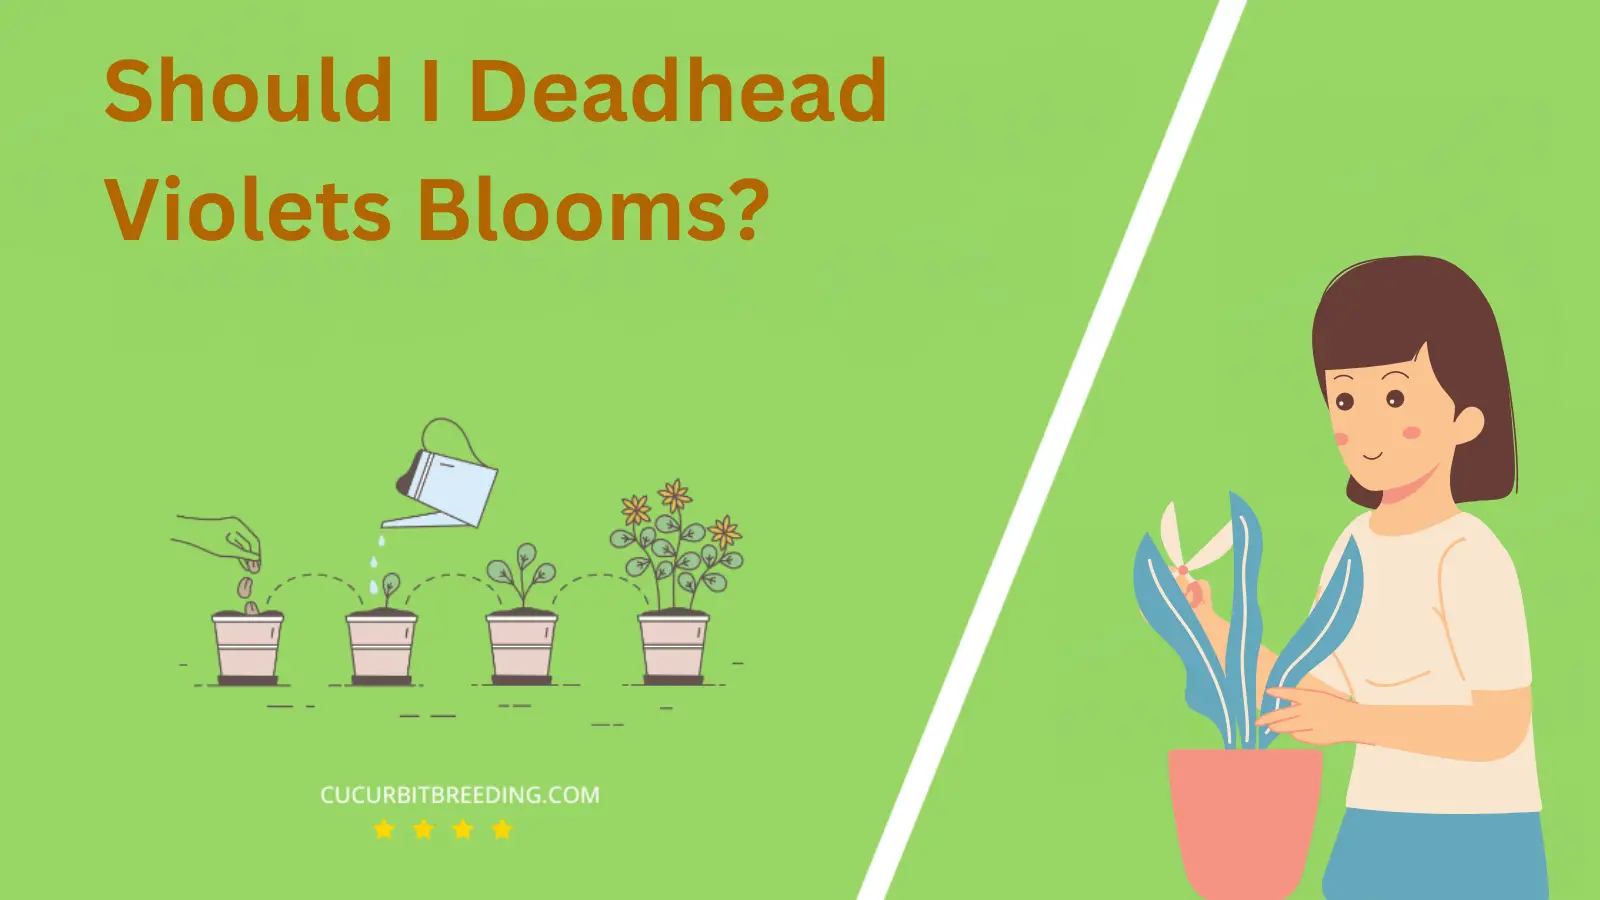 Should I Deadhead Violets Blooms?